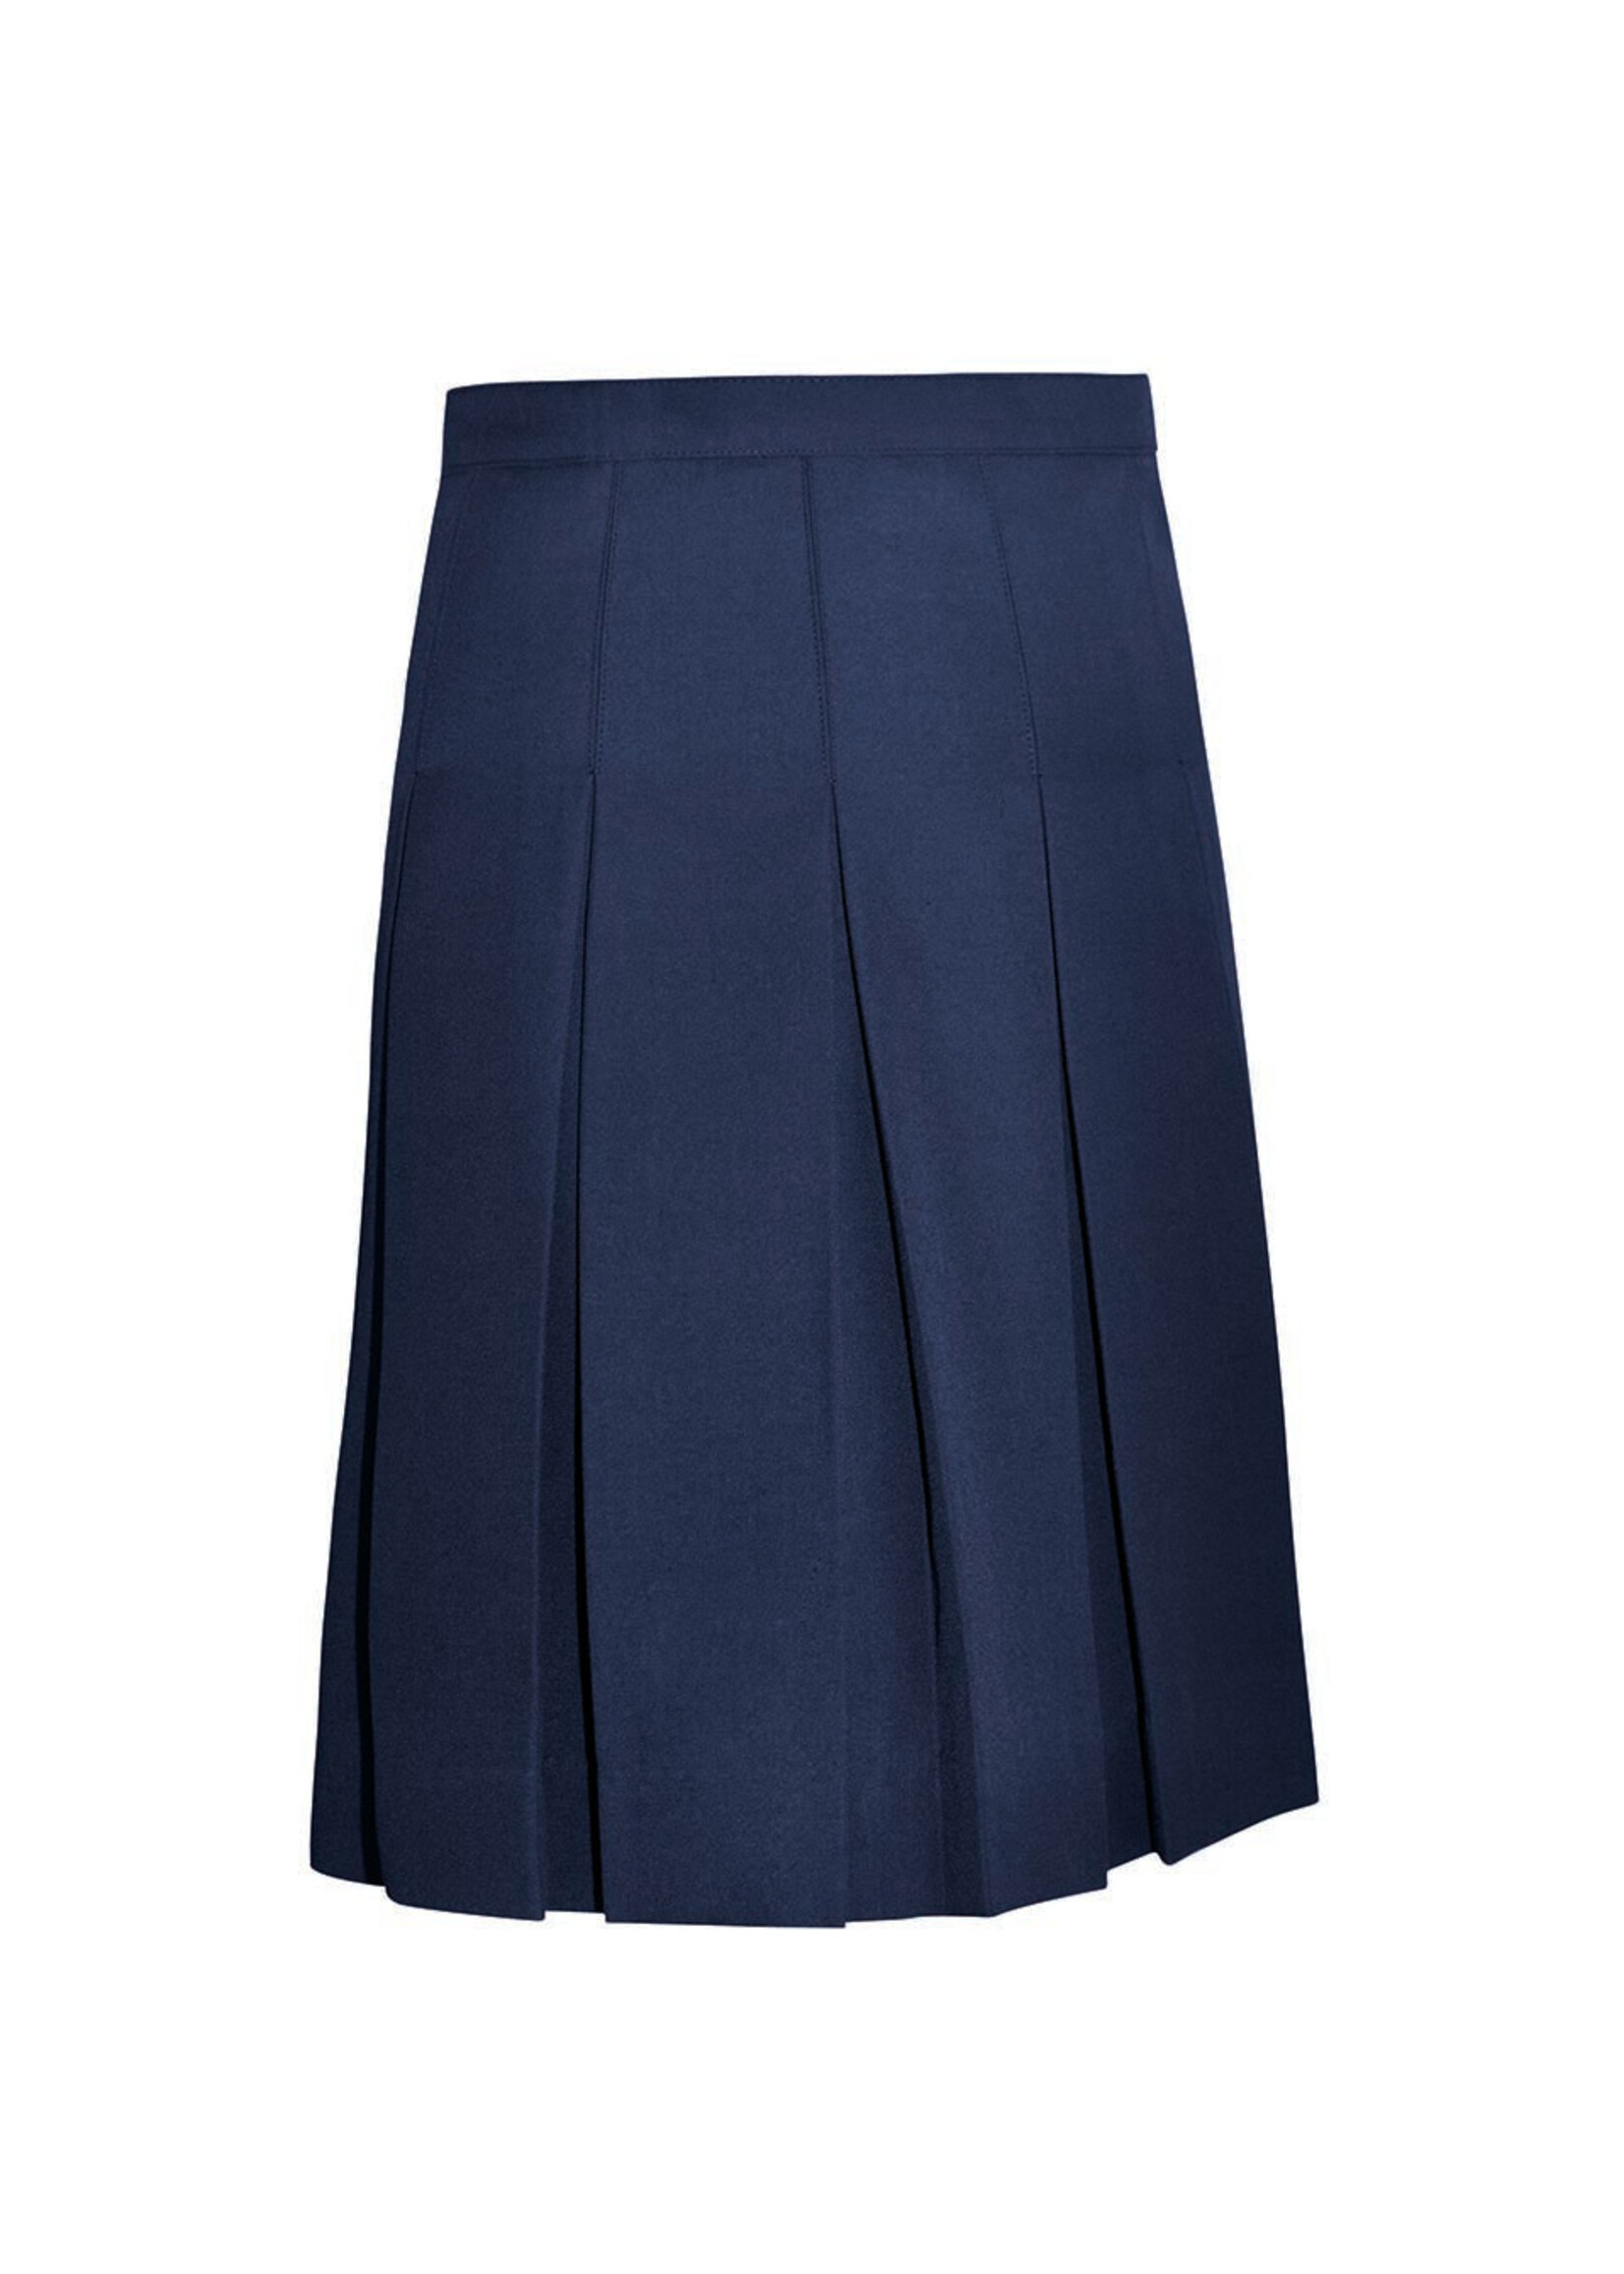 MDCHS 10 Pleat Solid Skirt  KN